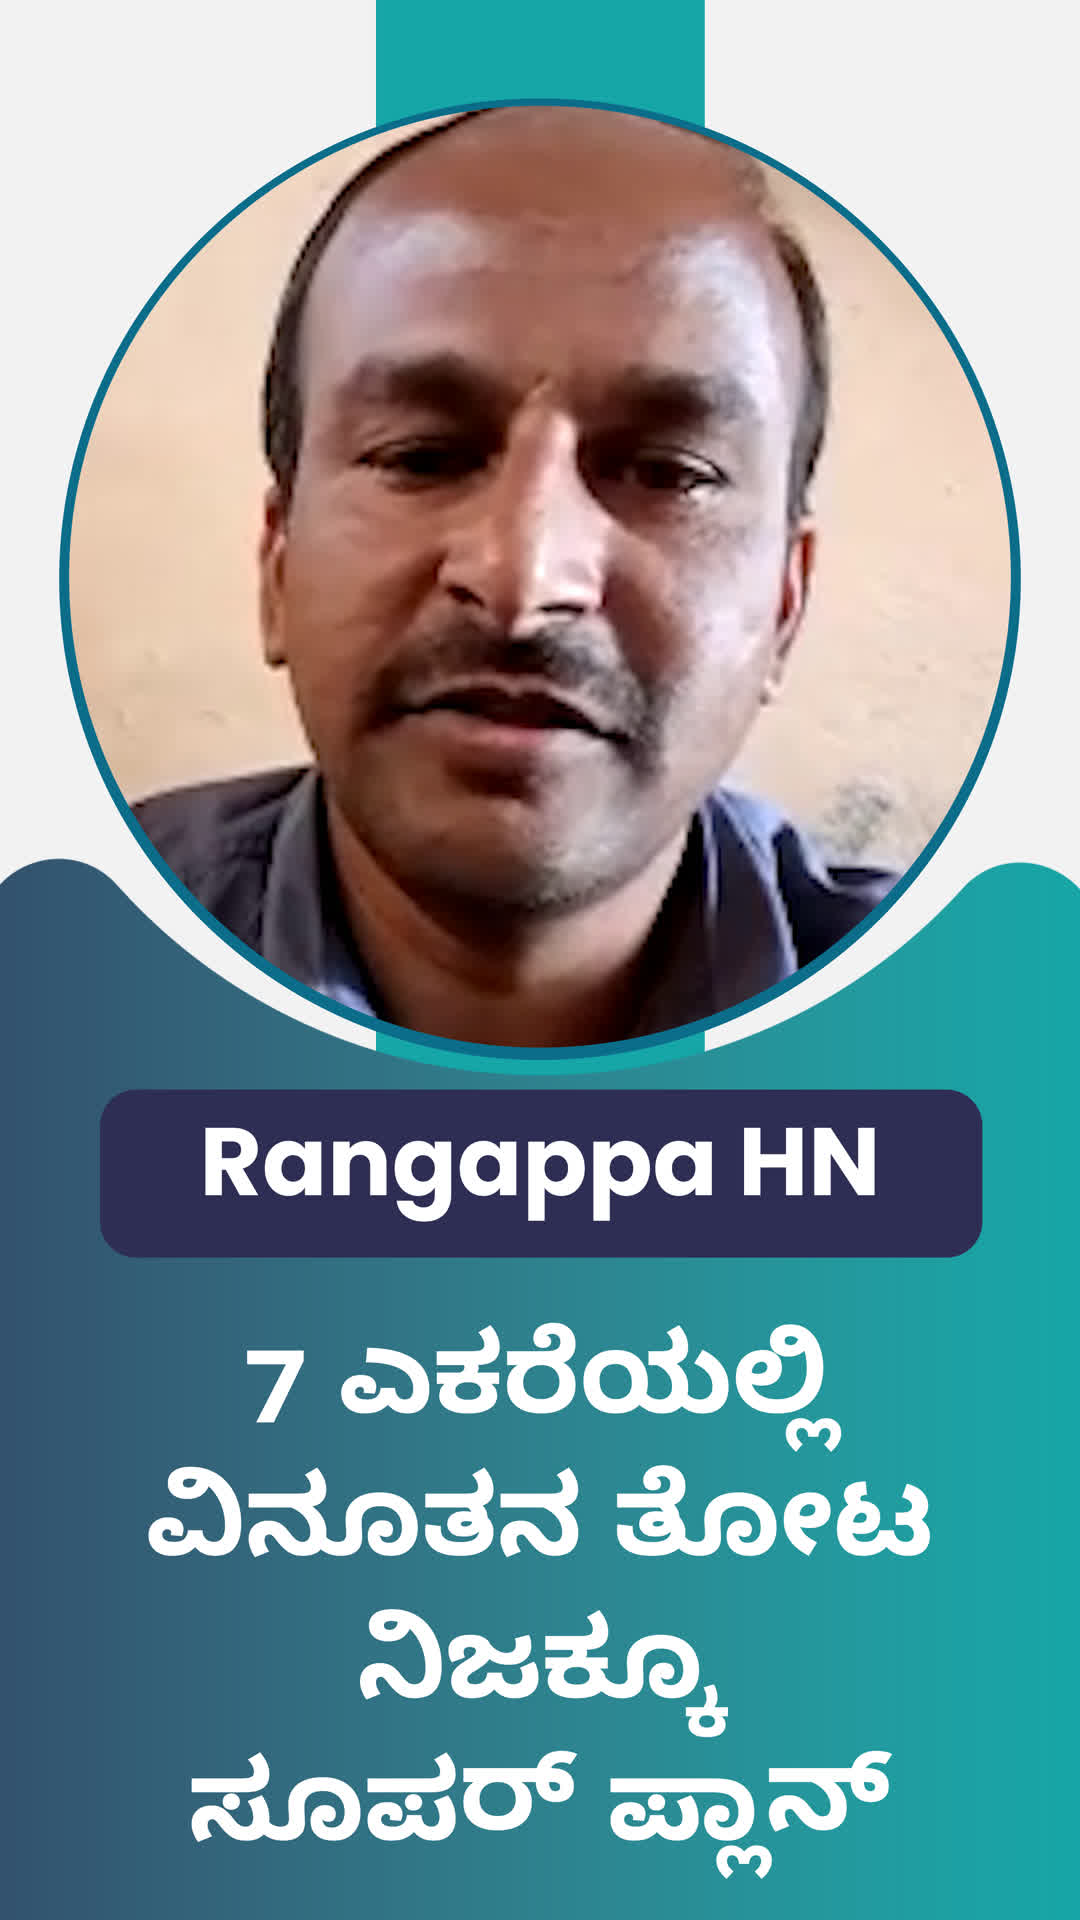 Rangappa H N's Honest Review of ffreedom app - Shimoga ,Karnataka